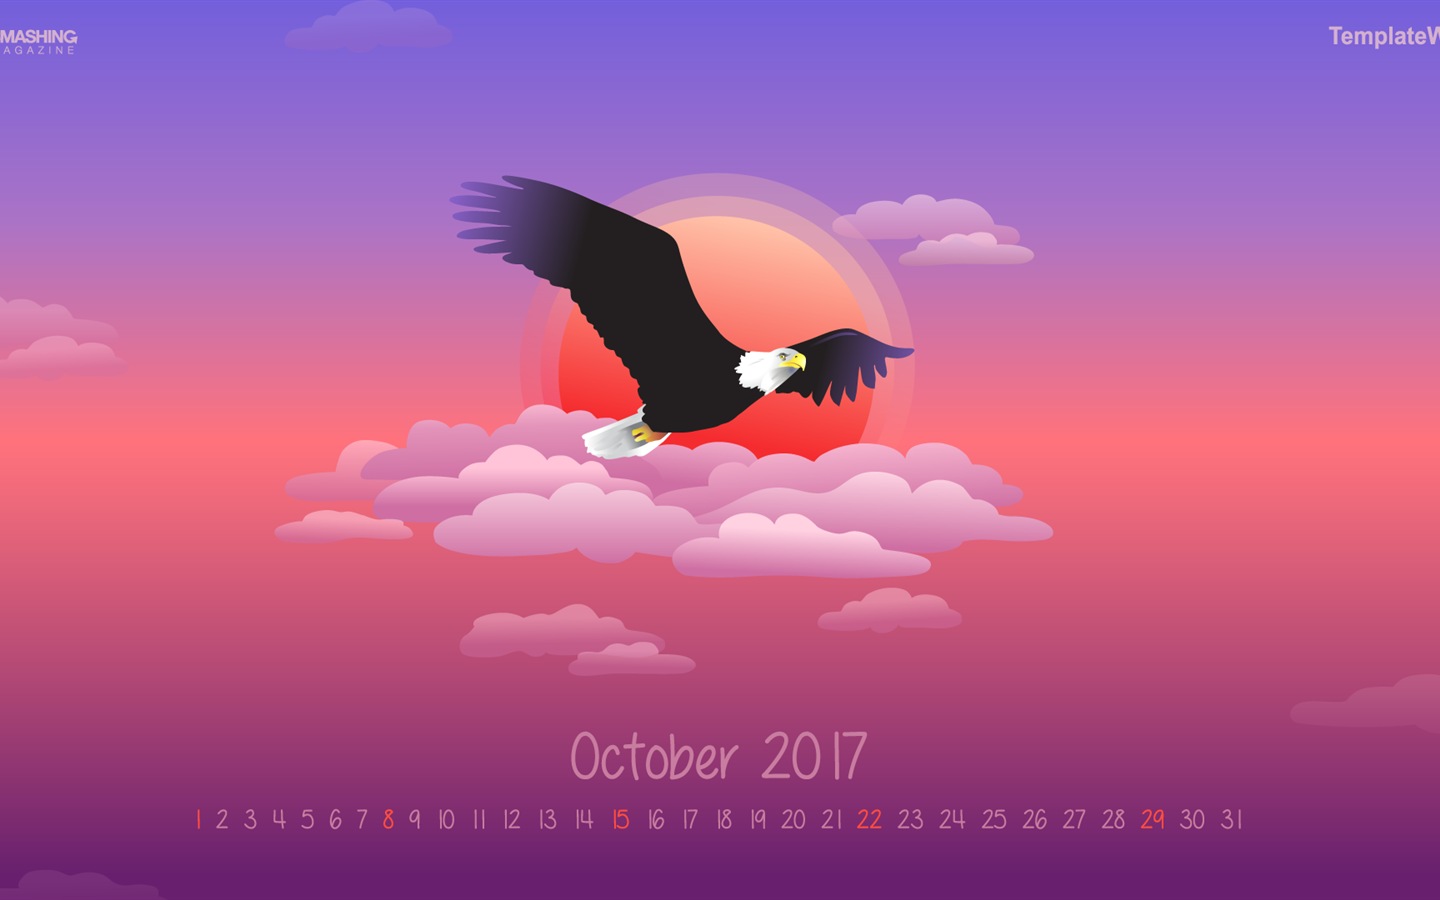 October 2017 calendar wallpaper #7 - 1440x900